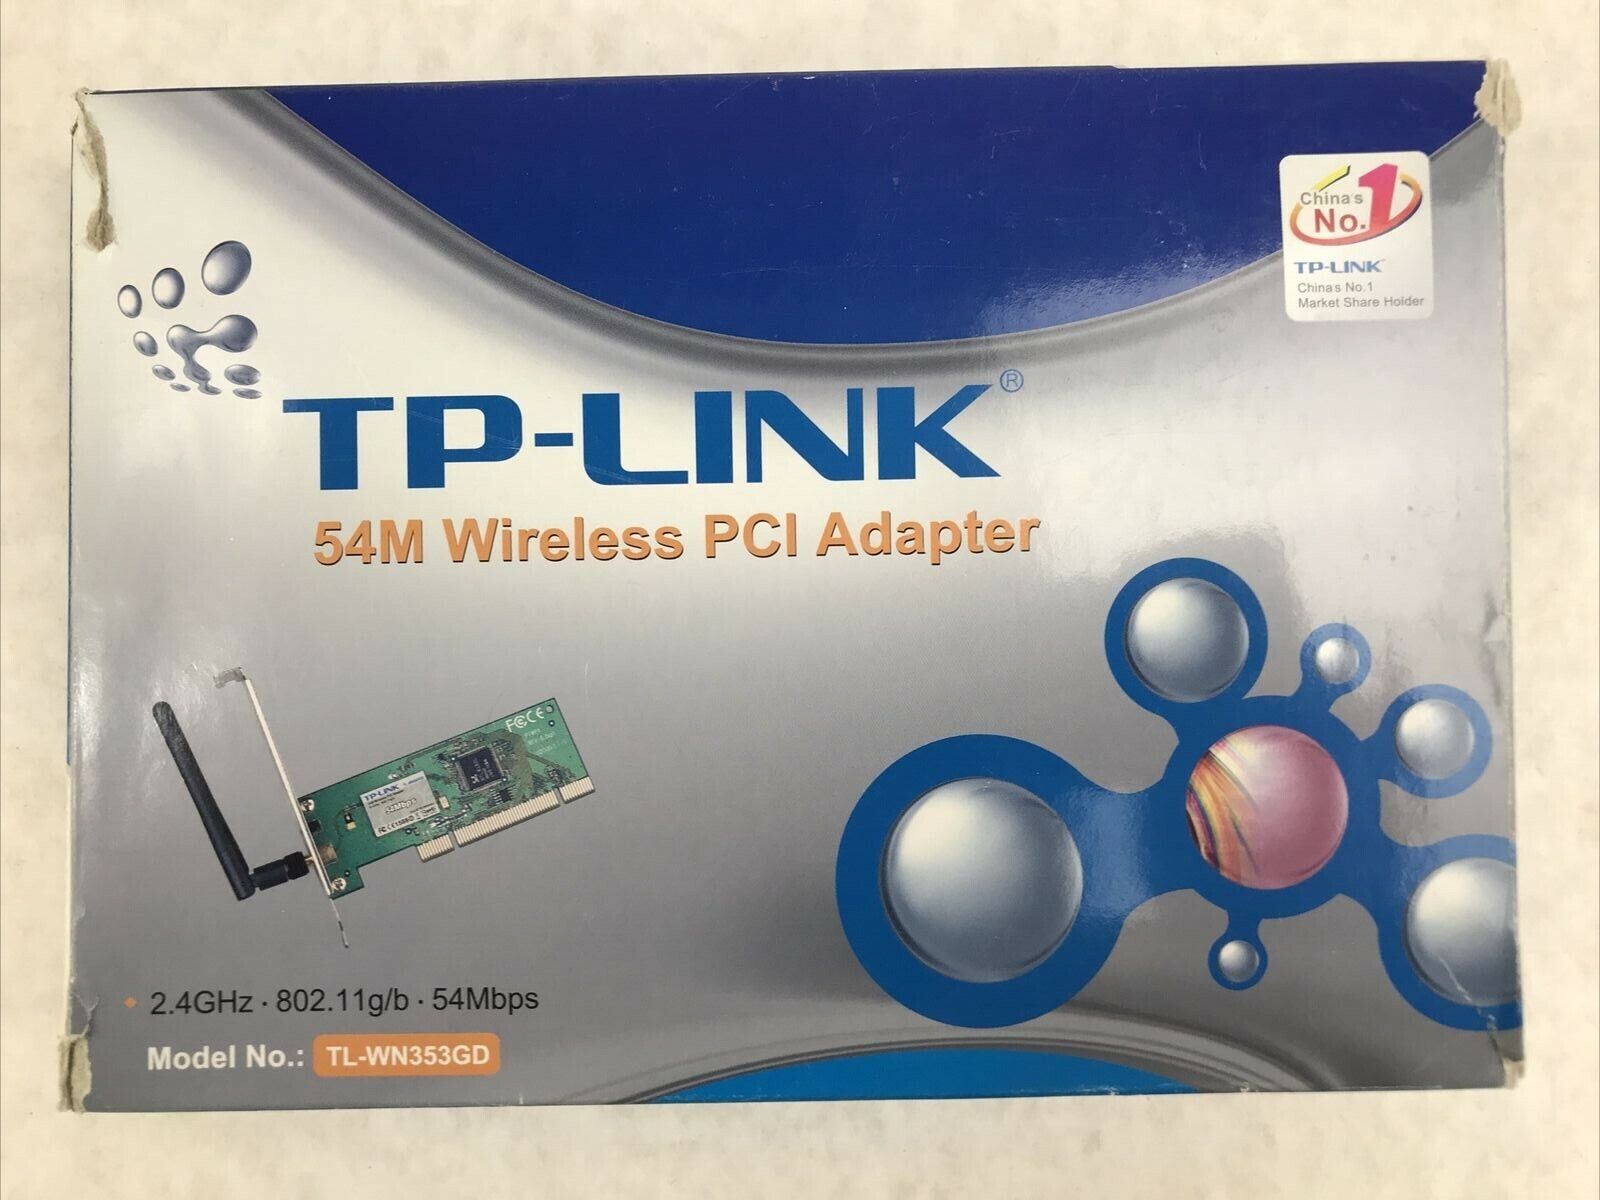 TP-Link 54M Wireless PCI Adapter TL-WN3533GD